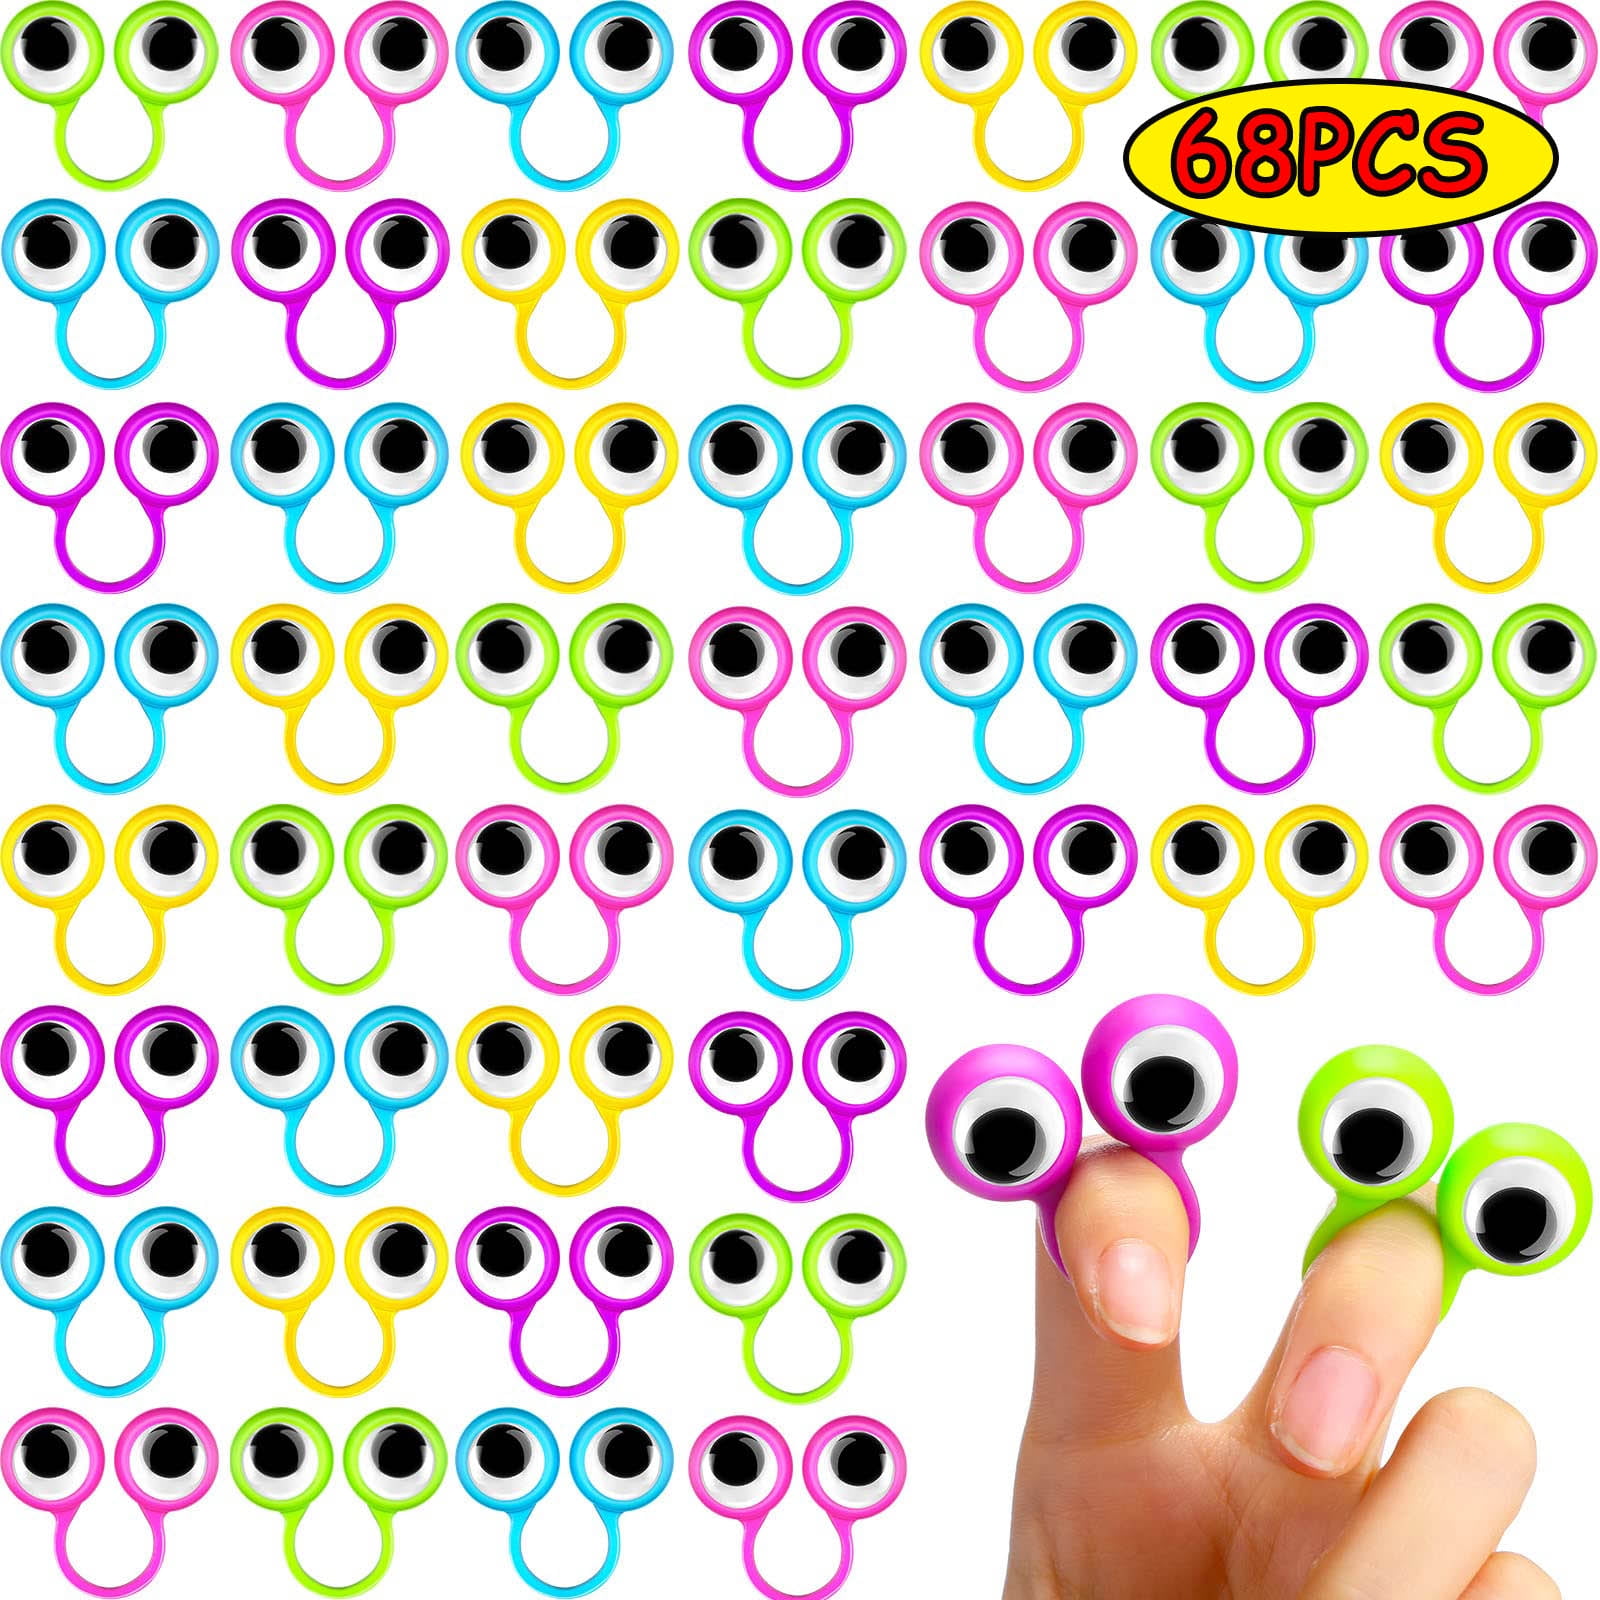 Easter Googly Eye Stickers - 15 Count - Bunny/Bee - One Eye